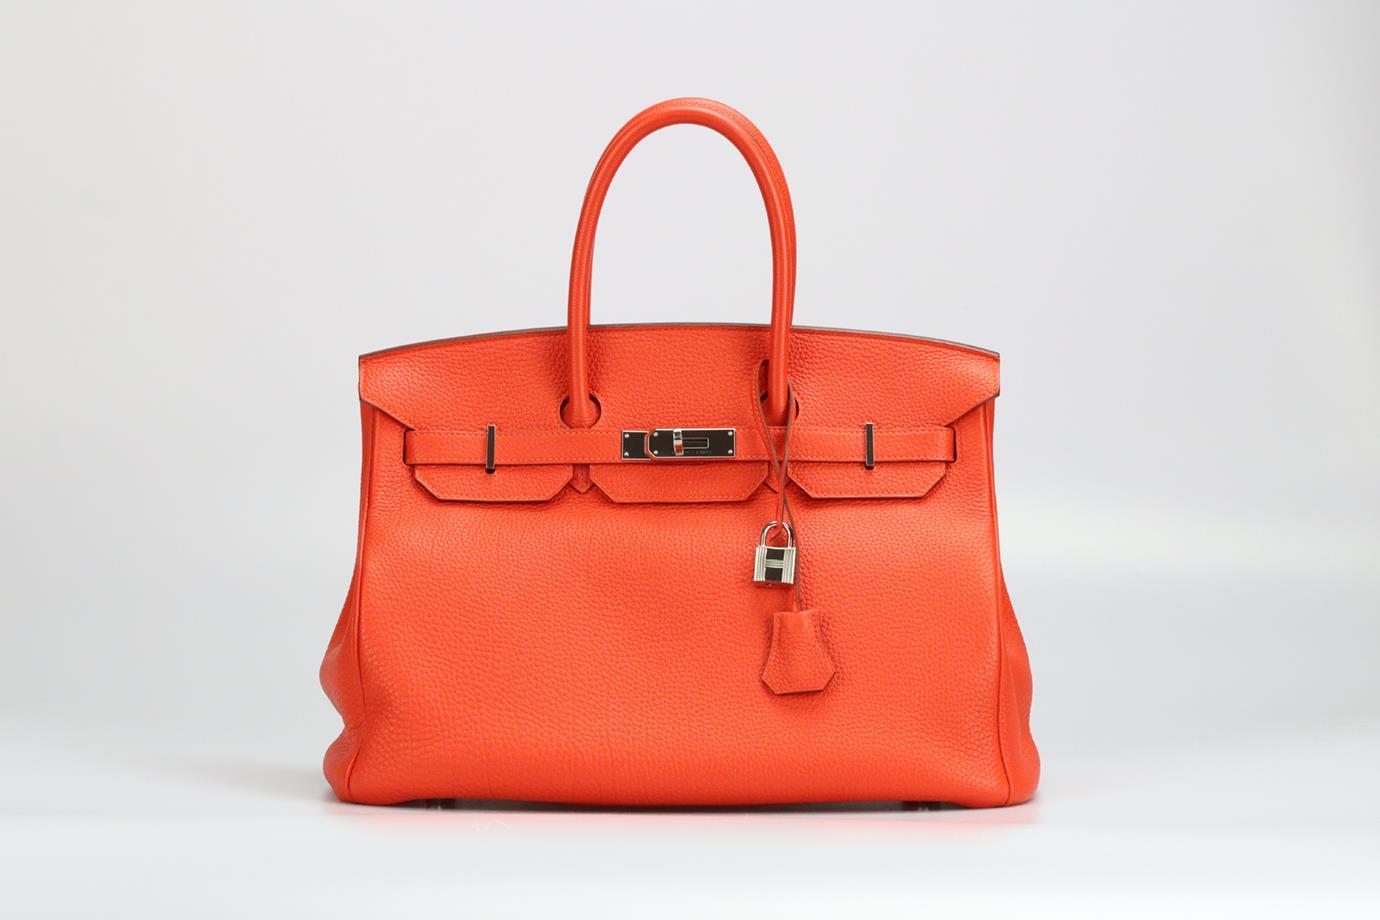 <ul>
<li>Hermès 2013 Birkin 35Cm Togo Leather Bag.</li>
<li>Orange.</li>
<li>Fermeture par serrure tournante - Devant.</li>
<li>Livré avec - clé, serrure et clochette.</li>
<li>Il n'est pas accompagné d'un sac à poussière ou d'une